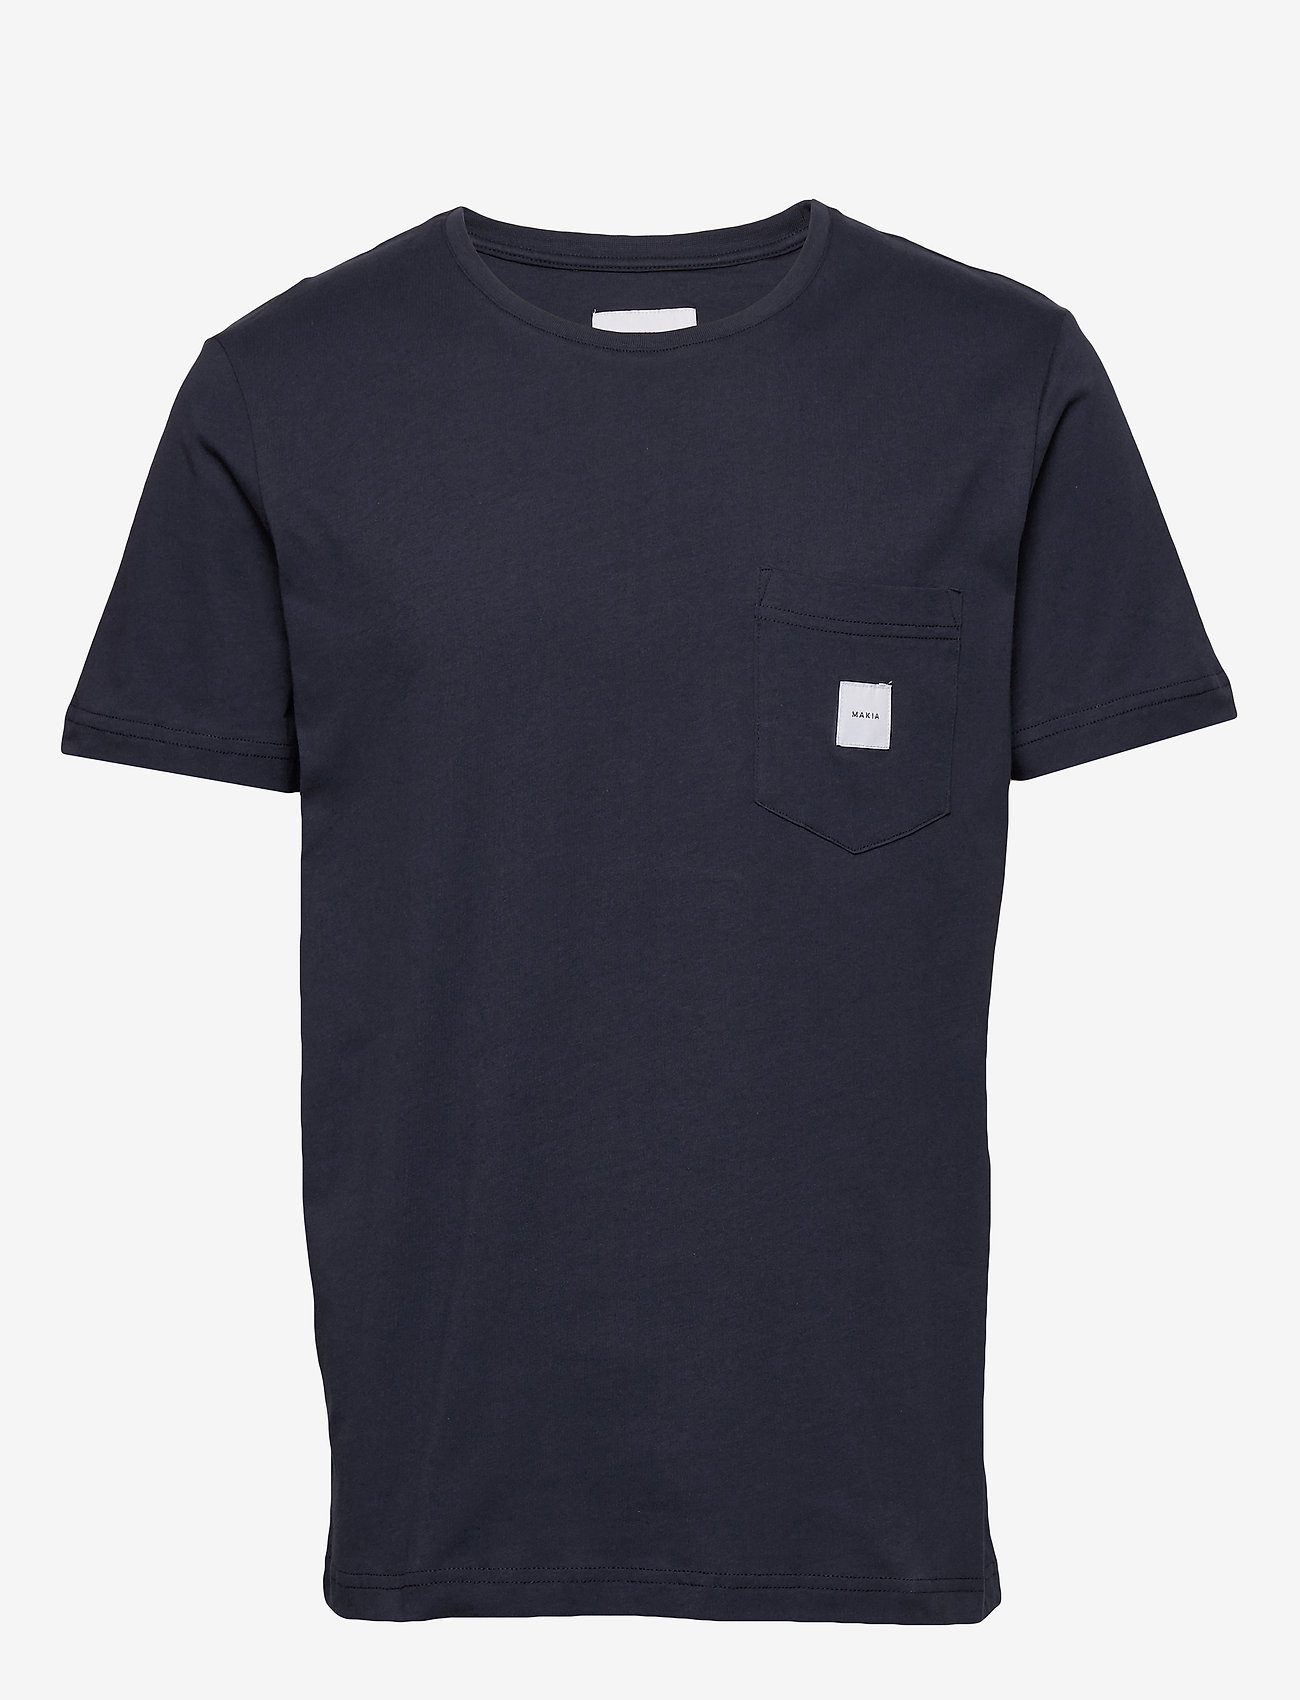 Makia - Square Pocket T-shirt - podstawowe koszulki - dark blue - 0